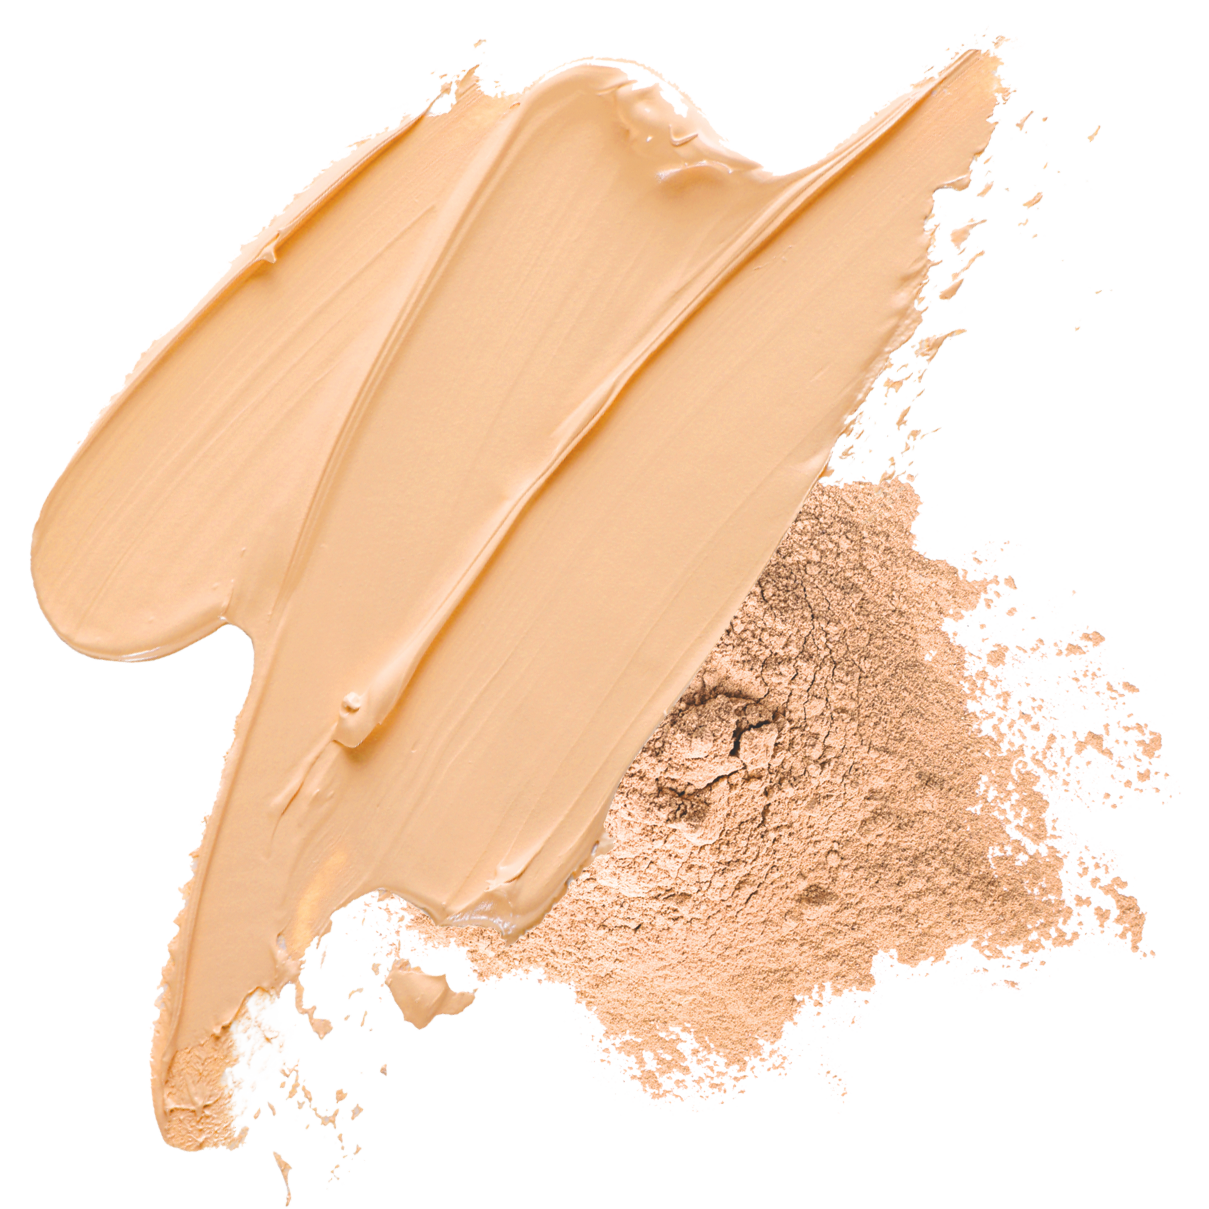 Skin Bloom Cream to Powder Compact